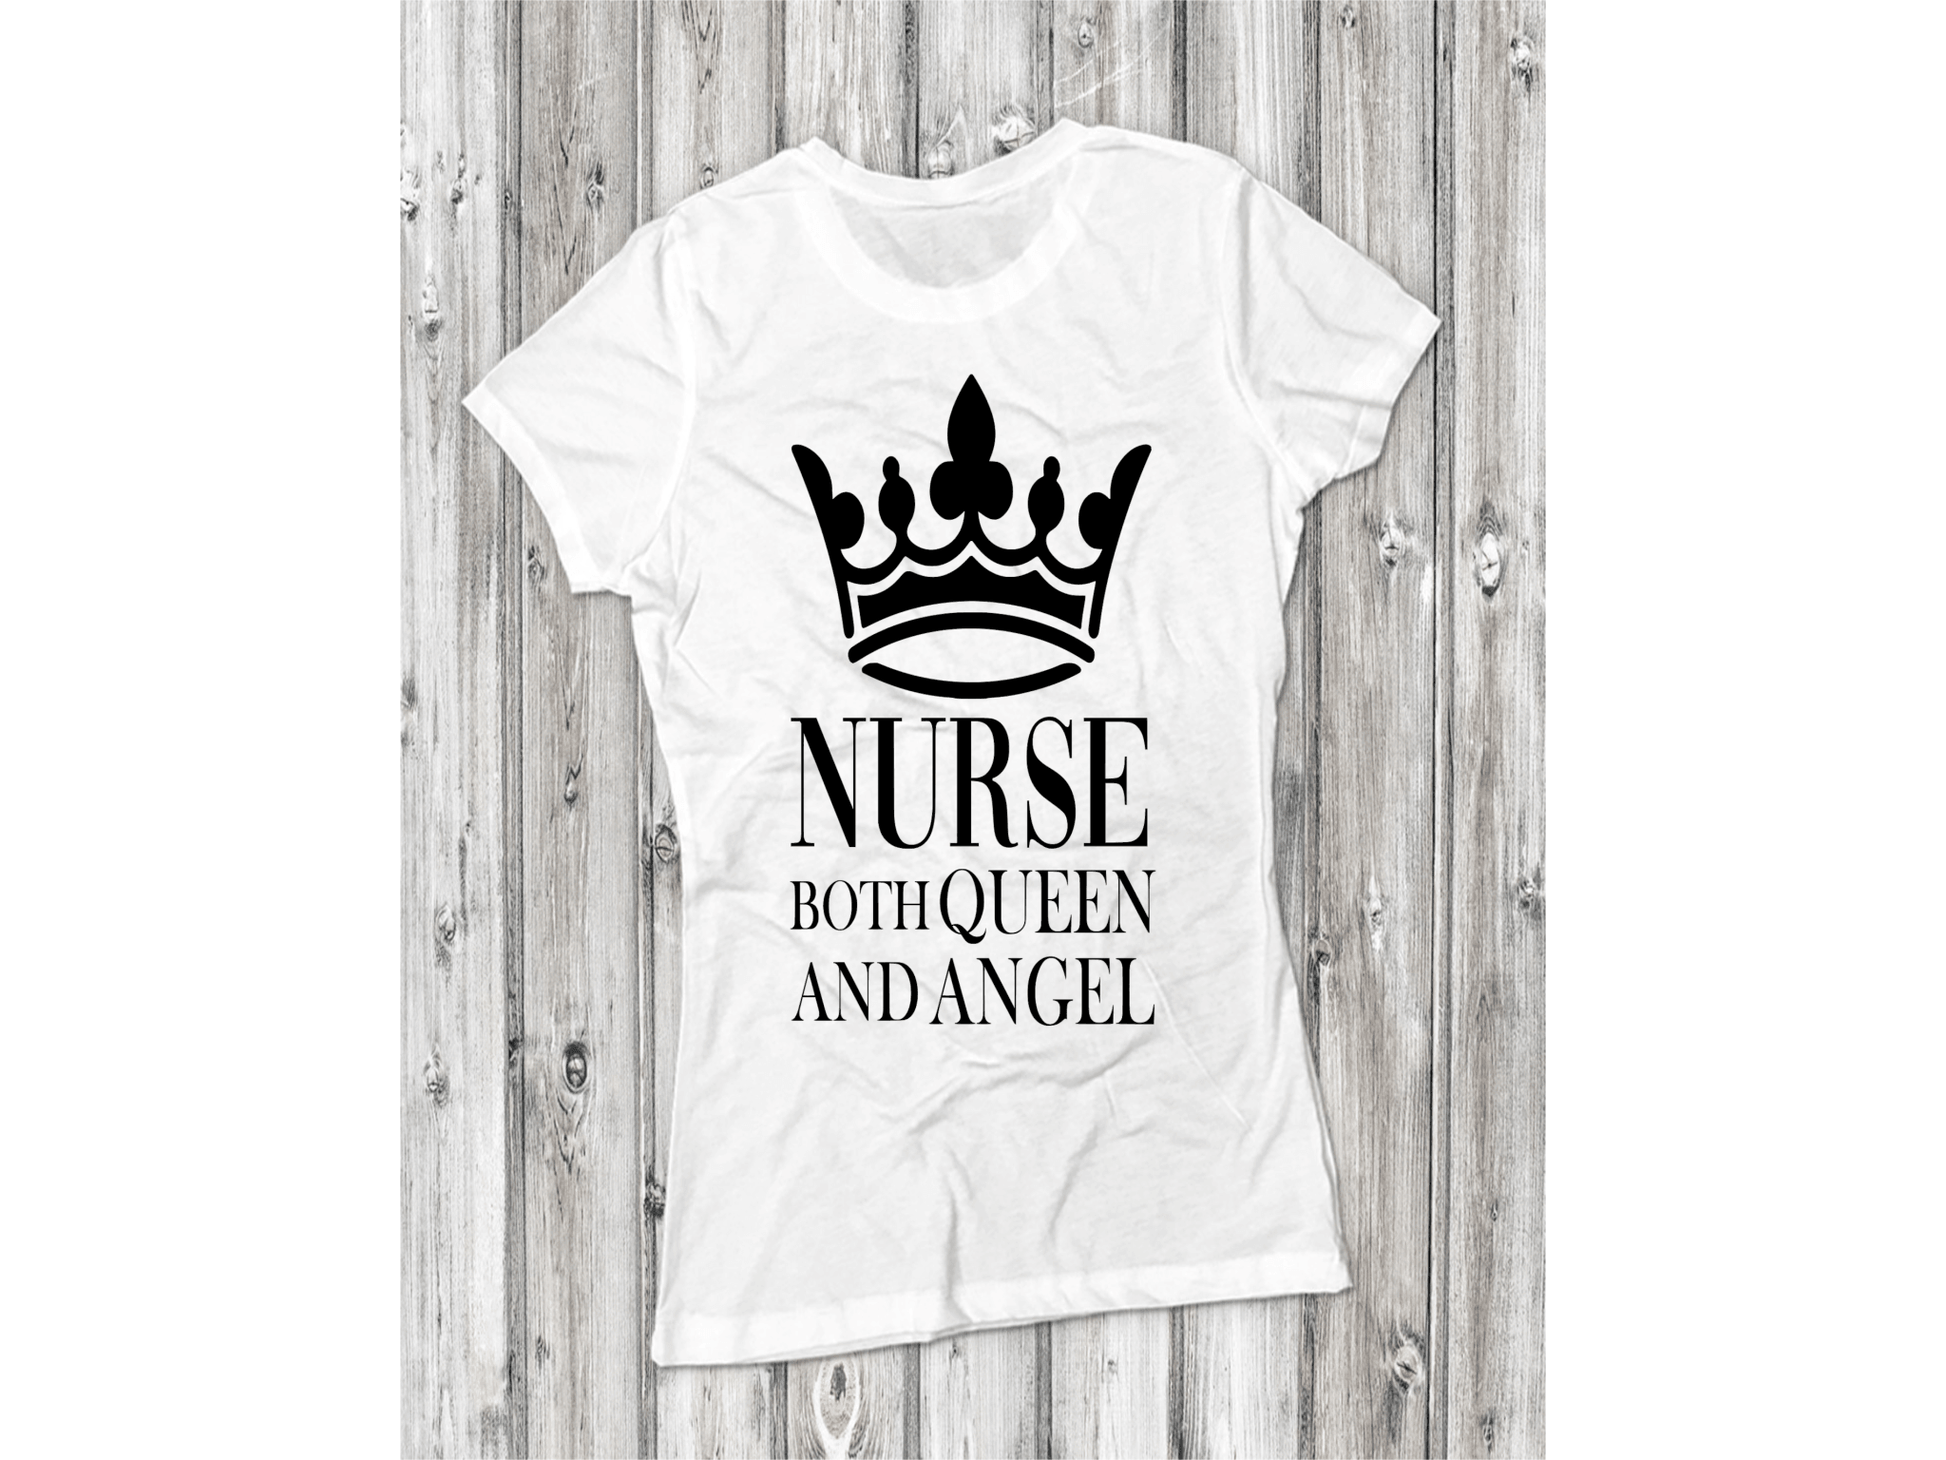 Nurse both Queen and Angel - smuniqueshirts